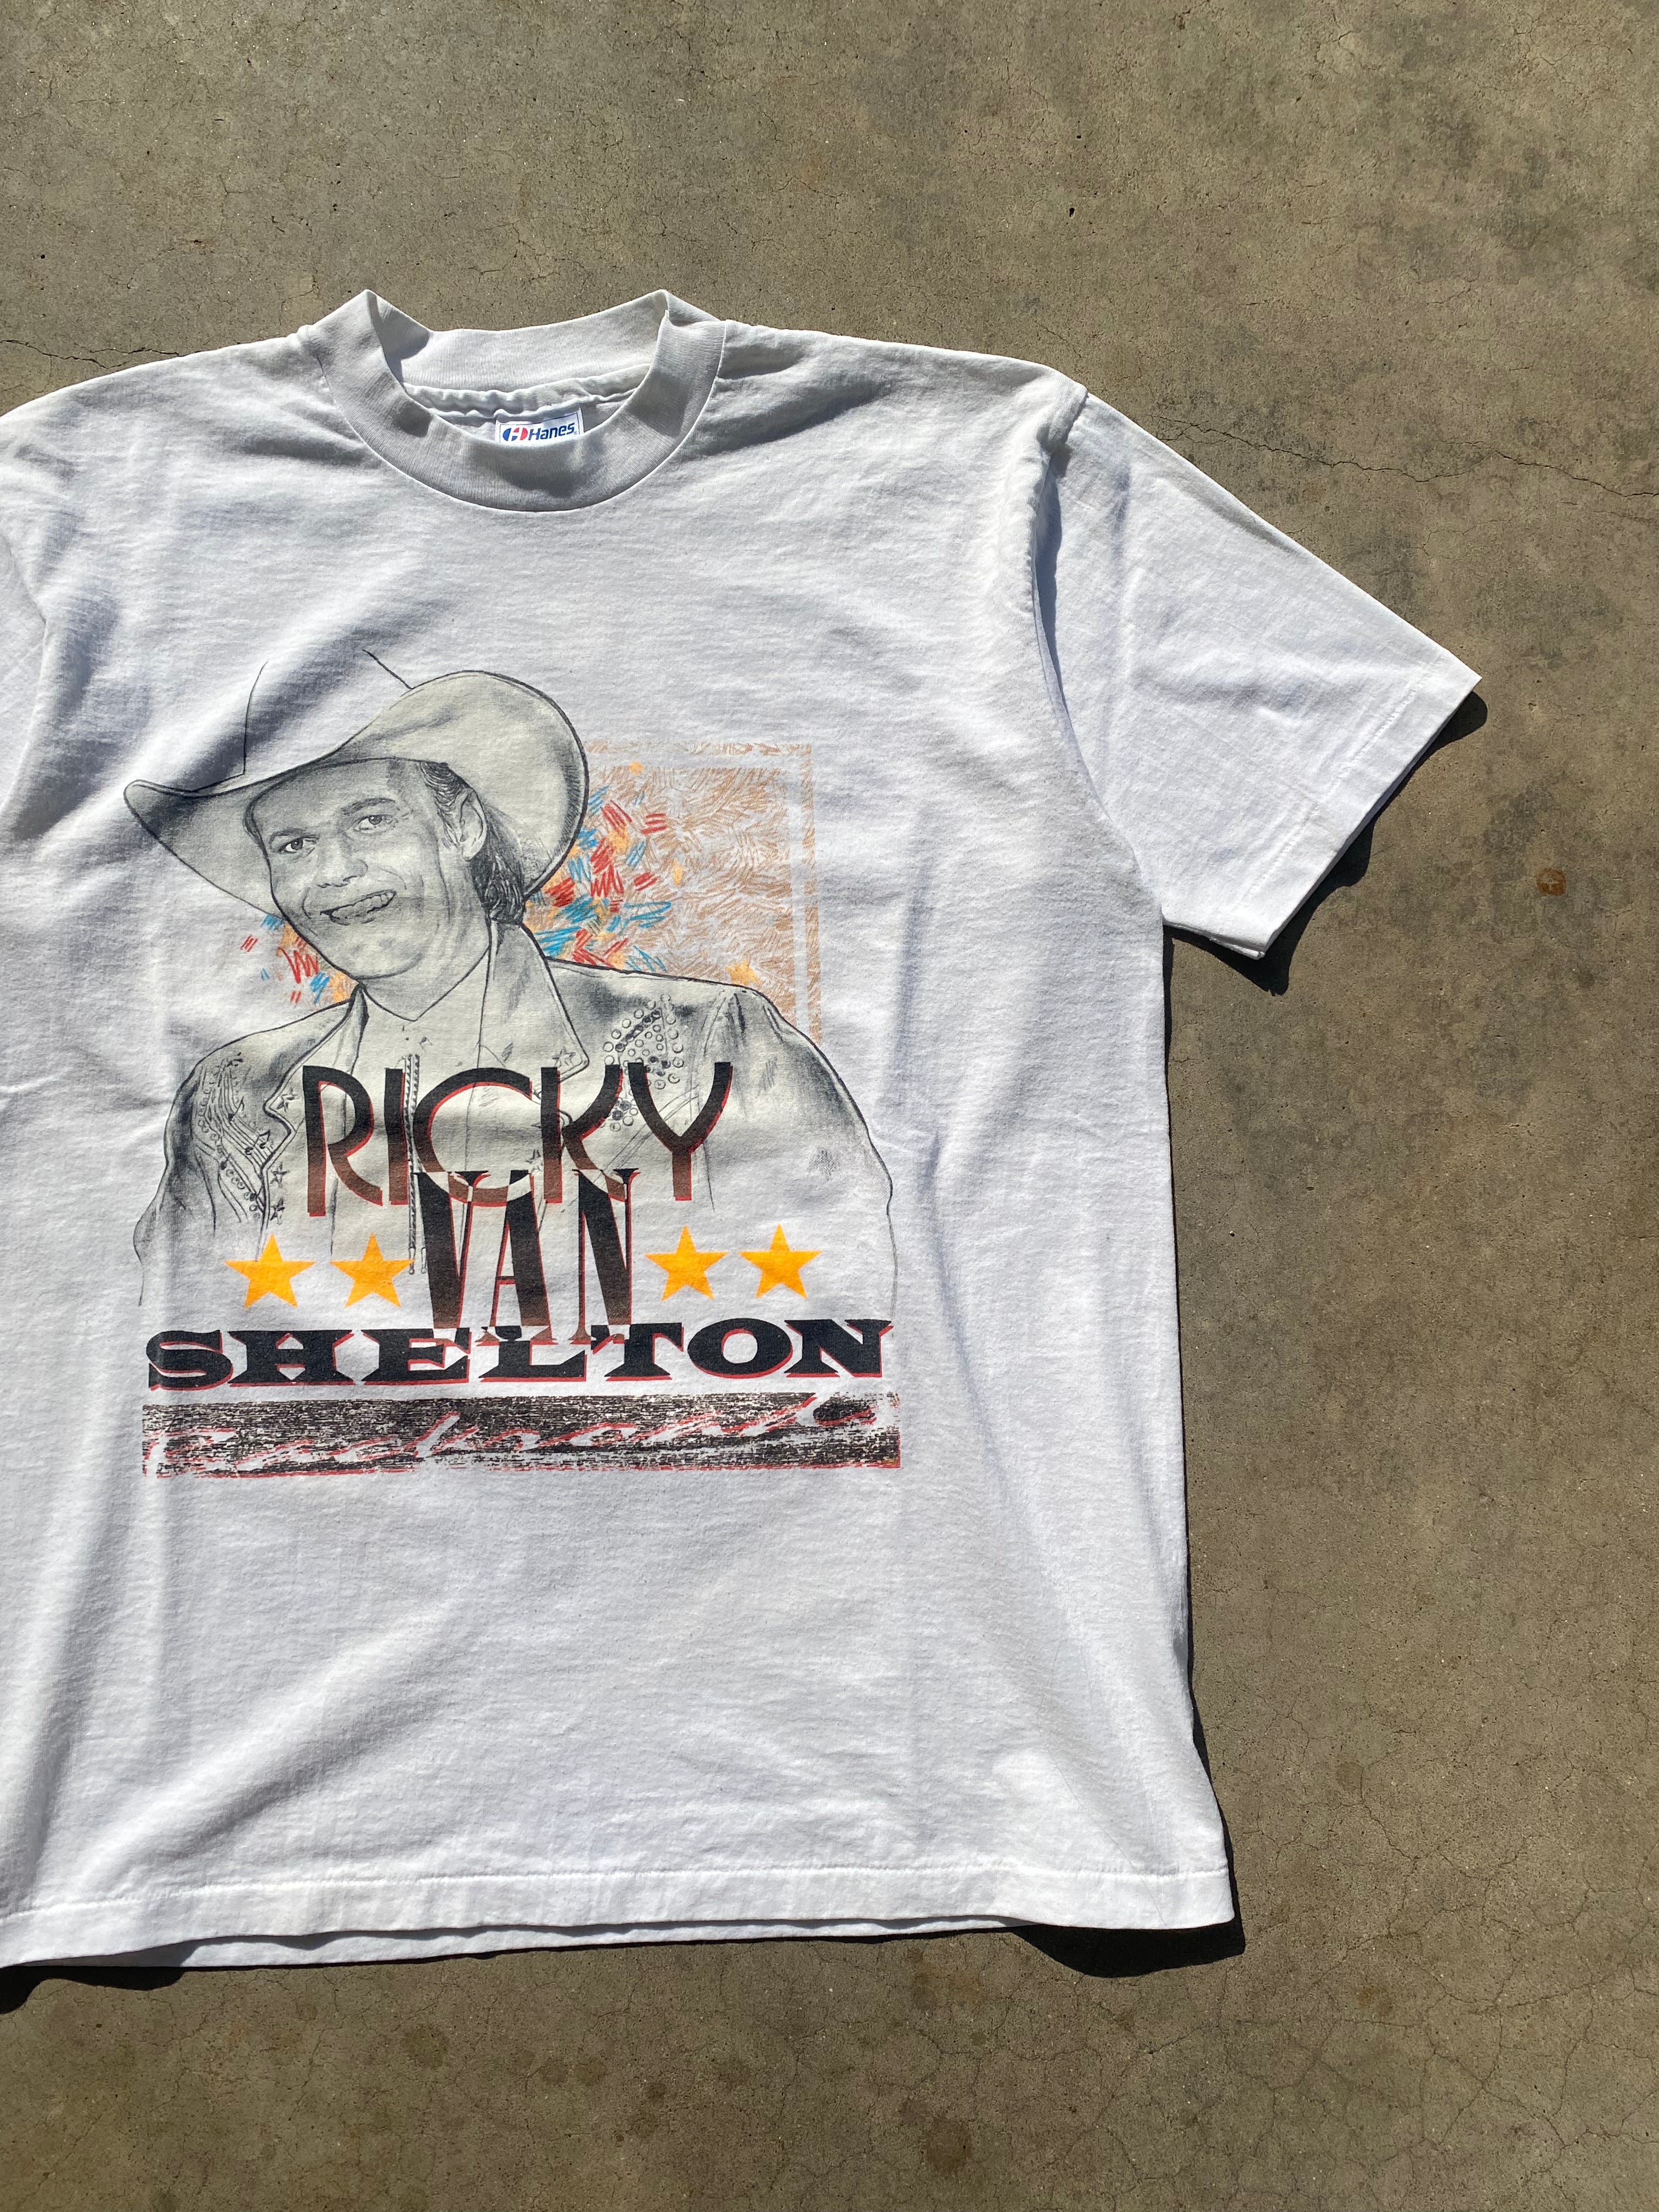 1991 Ricky Van Shelton “I Am A Simple Man” Tour T-Shirt (M/L)